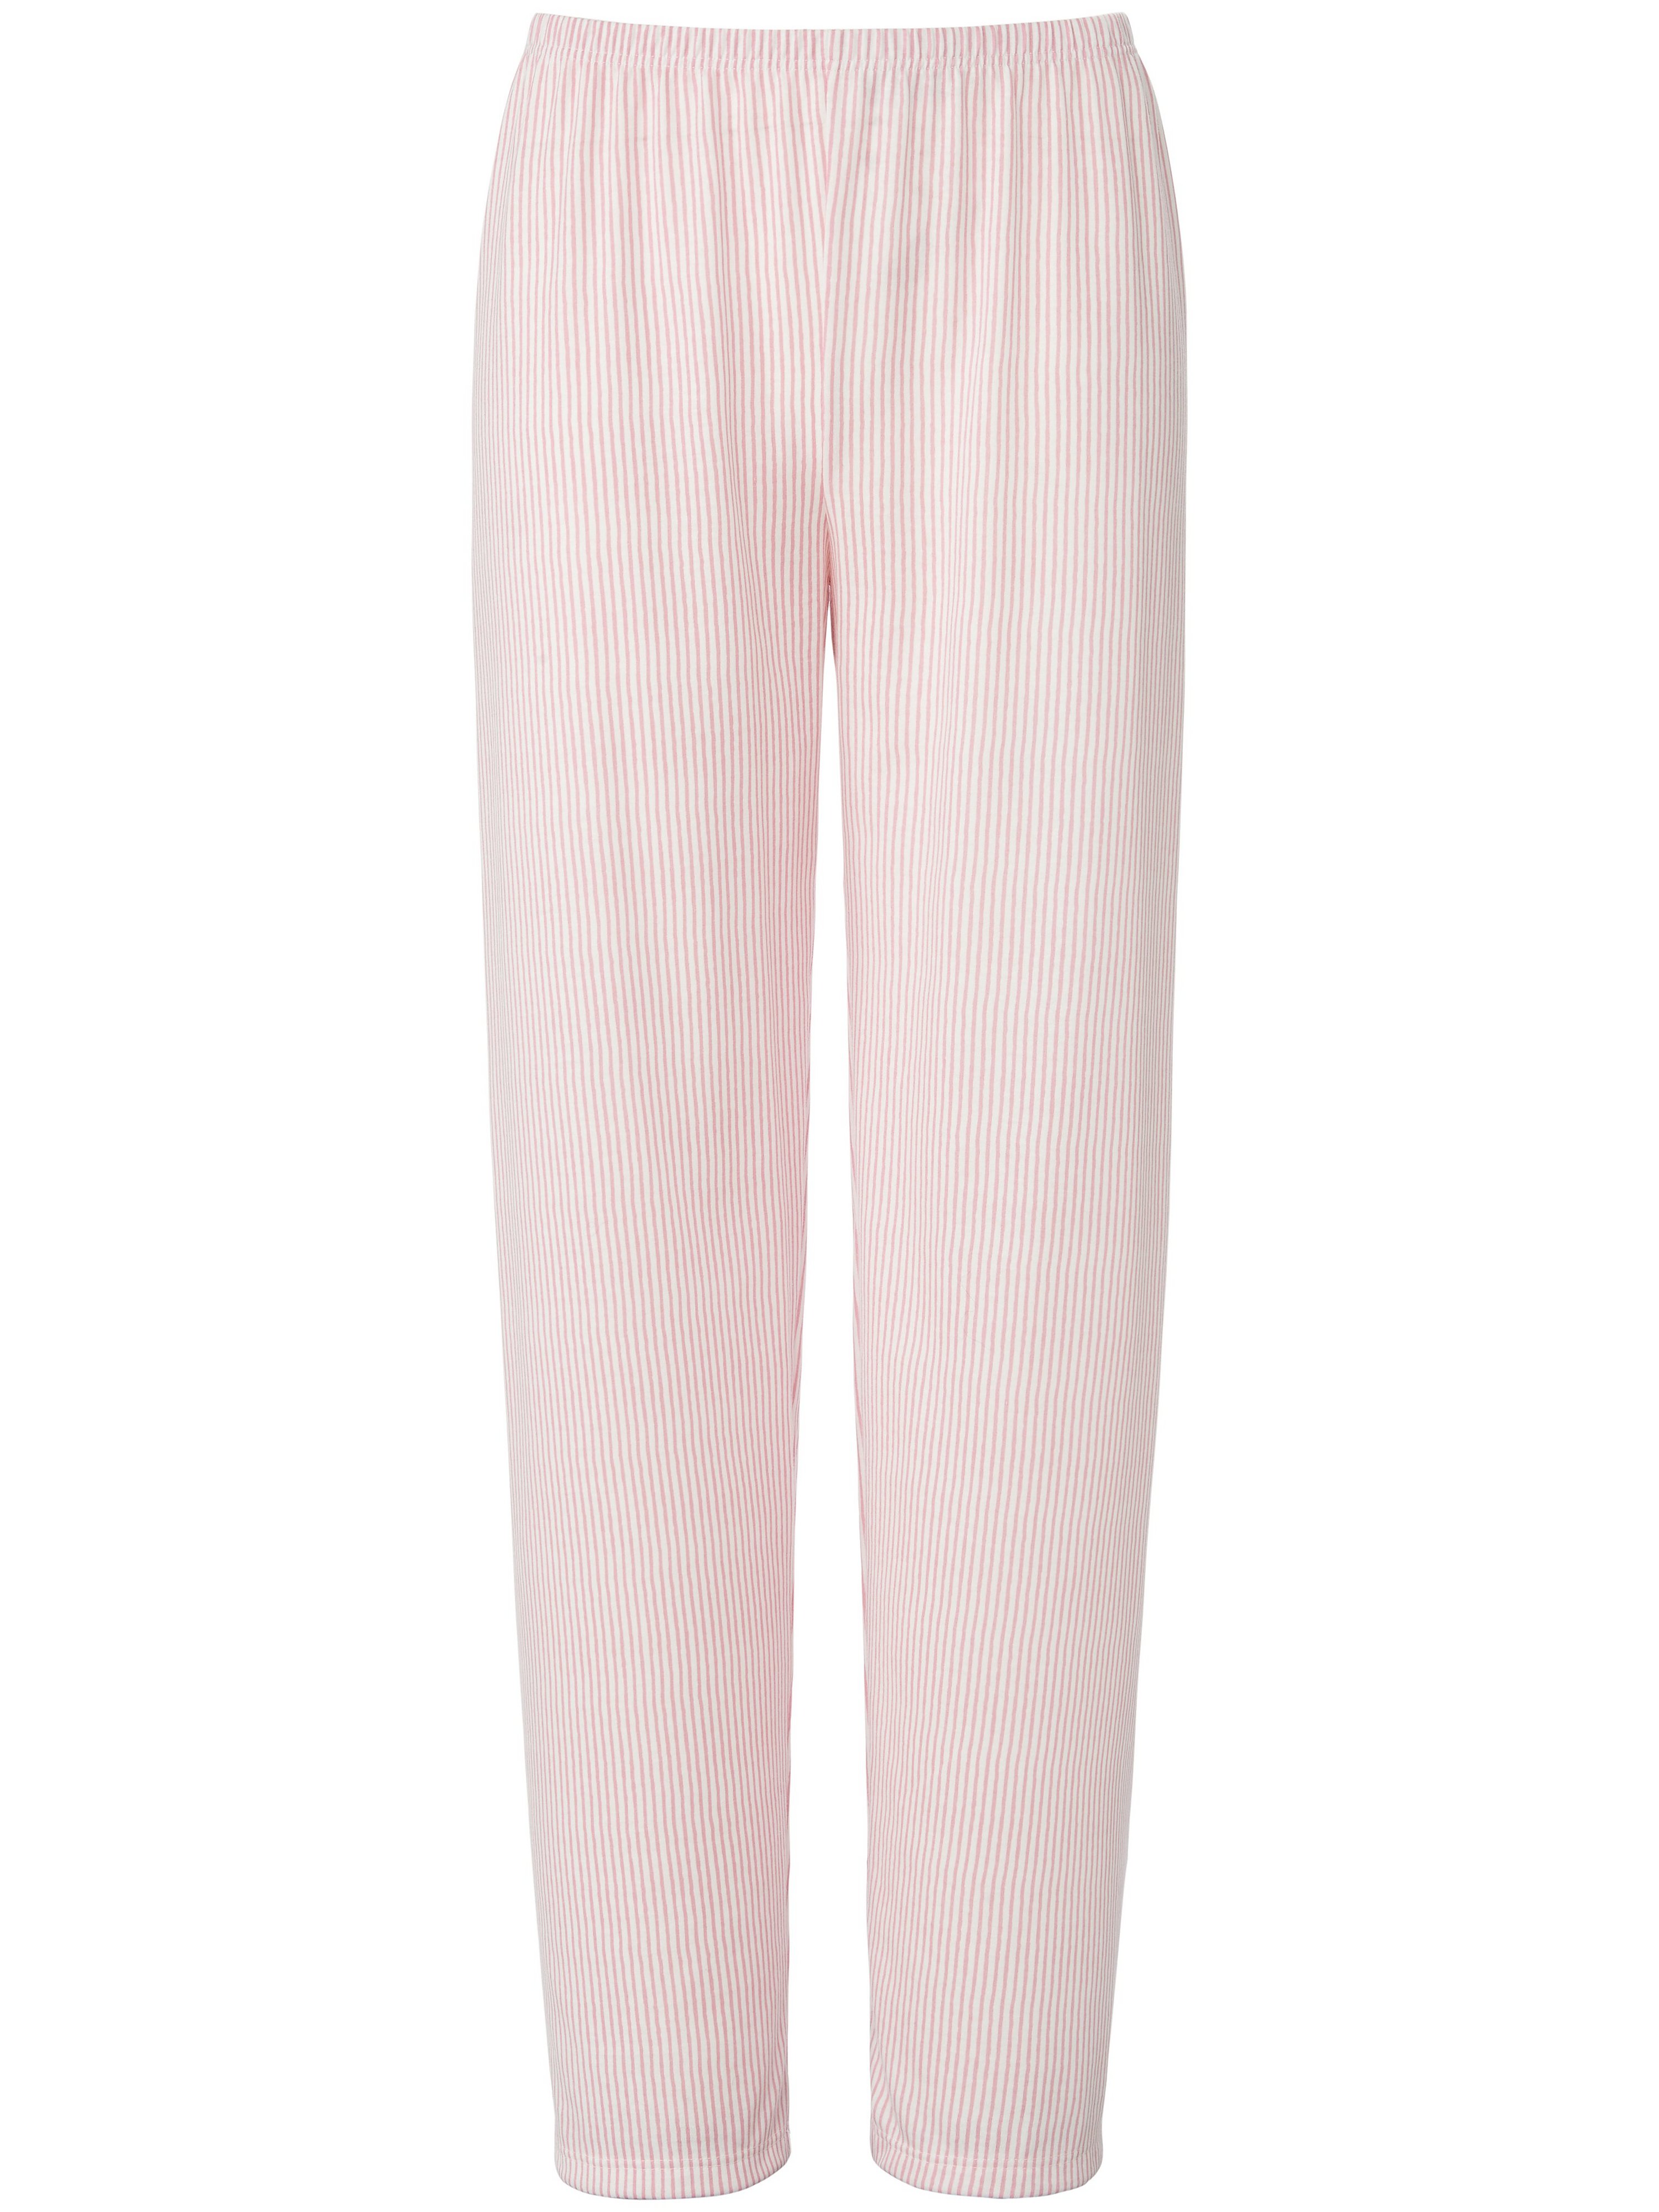 Le pantalon pyjama 100% coton  PETER HAHN PURE EDITION blanc